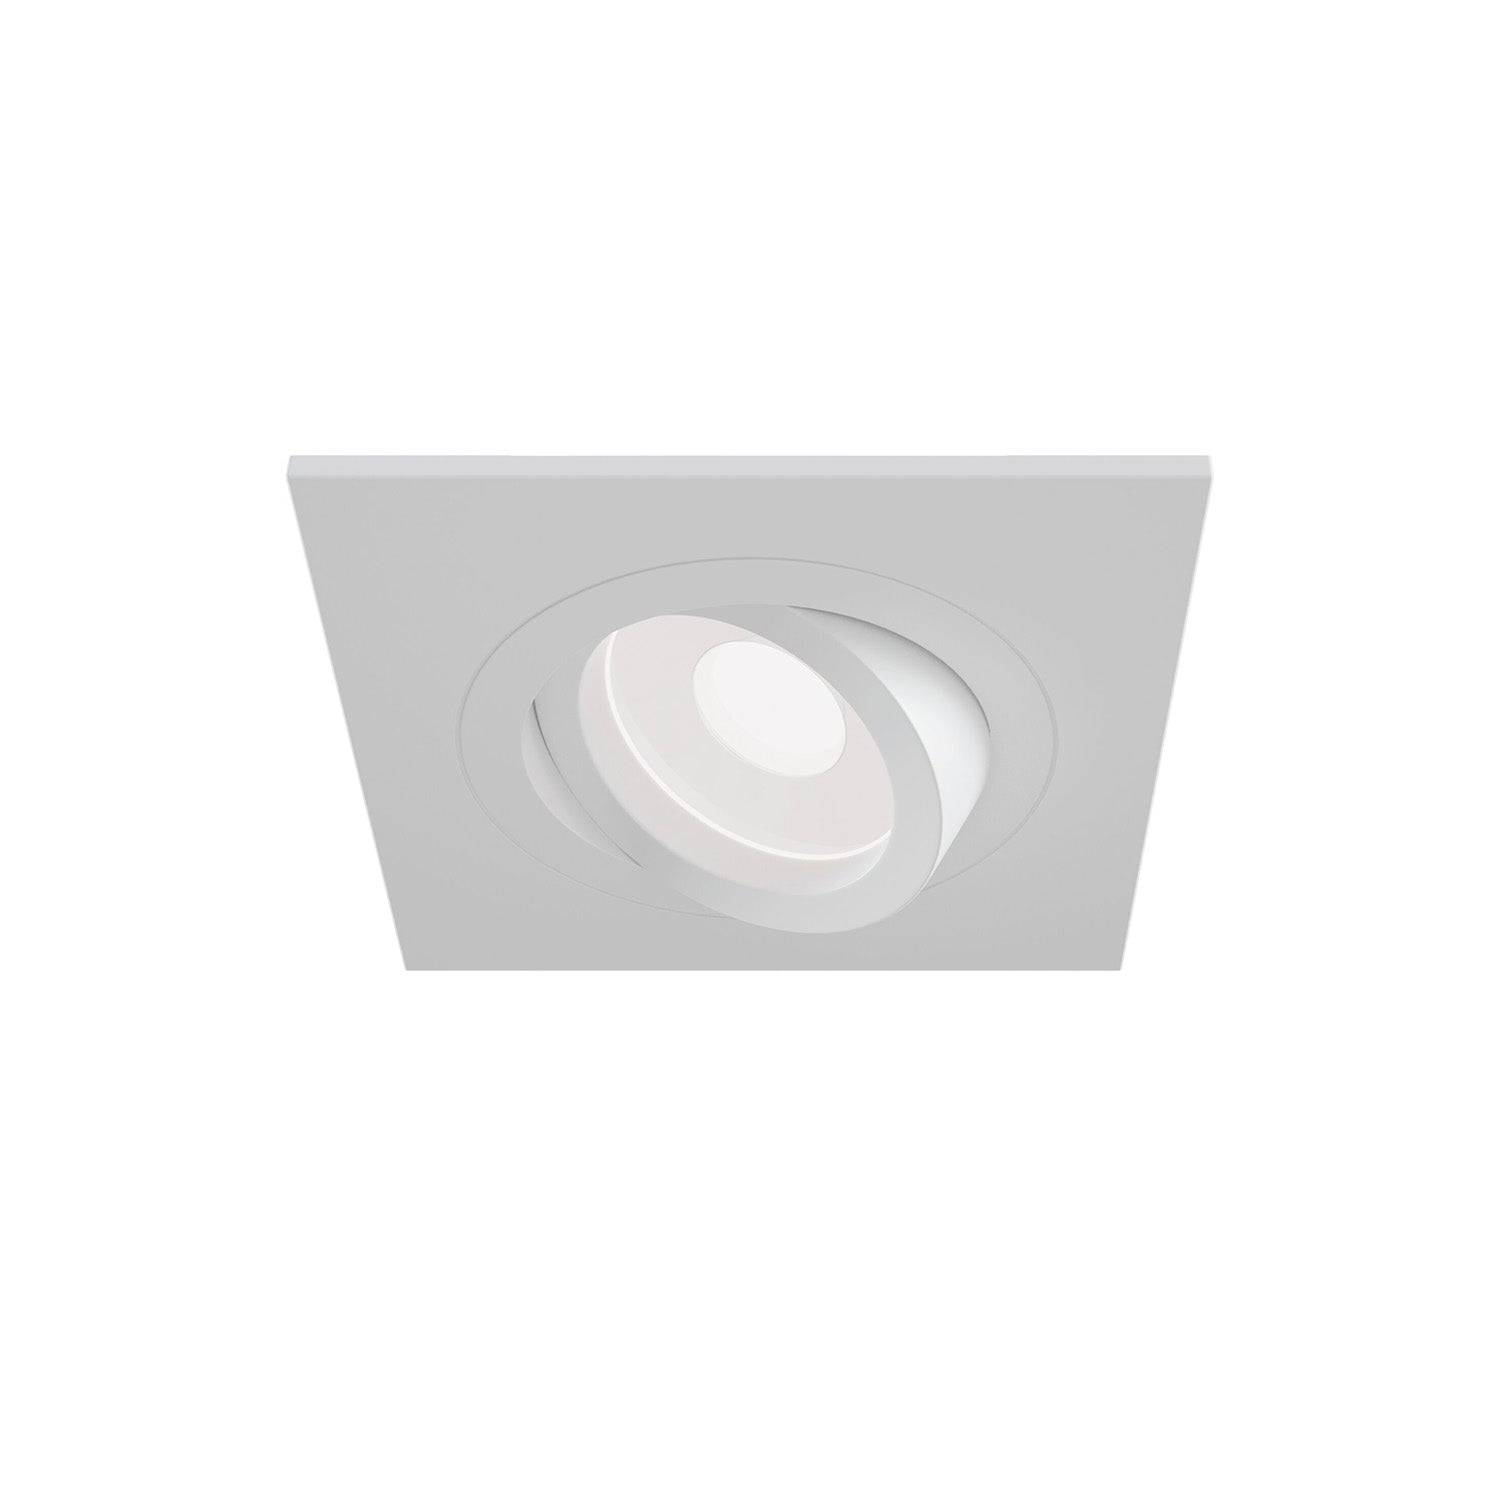 ATOM B - Square recessed spotlight 92mm black or white